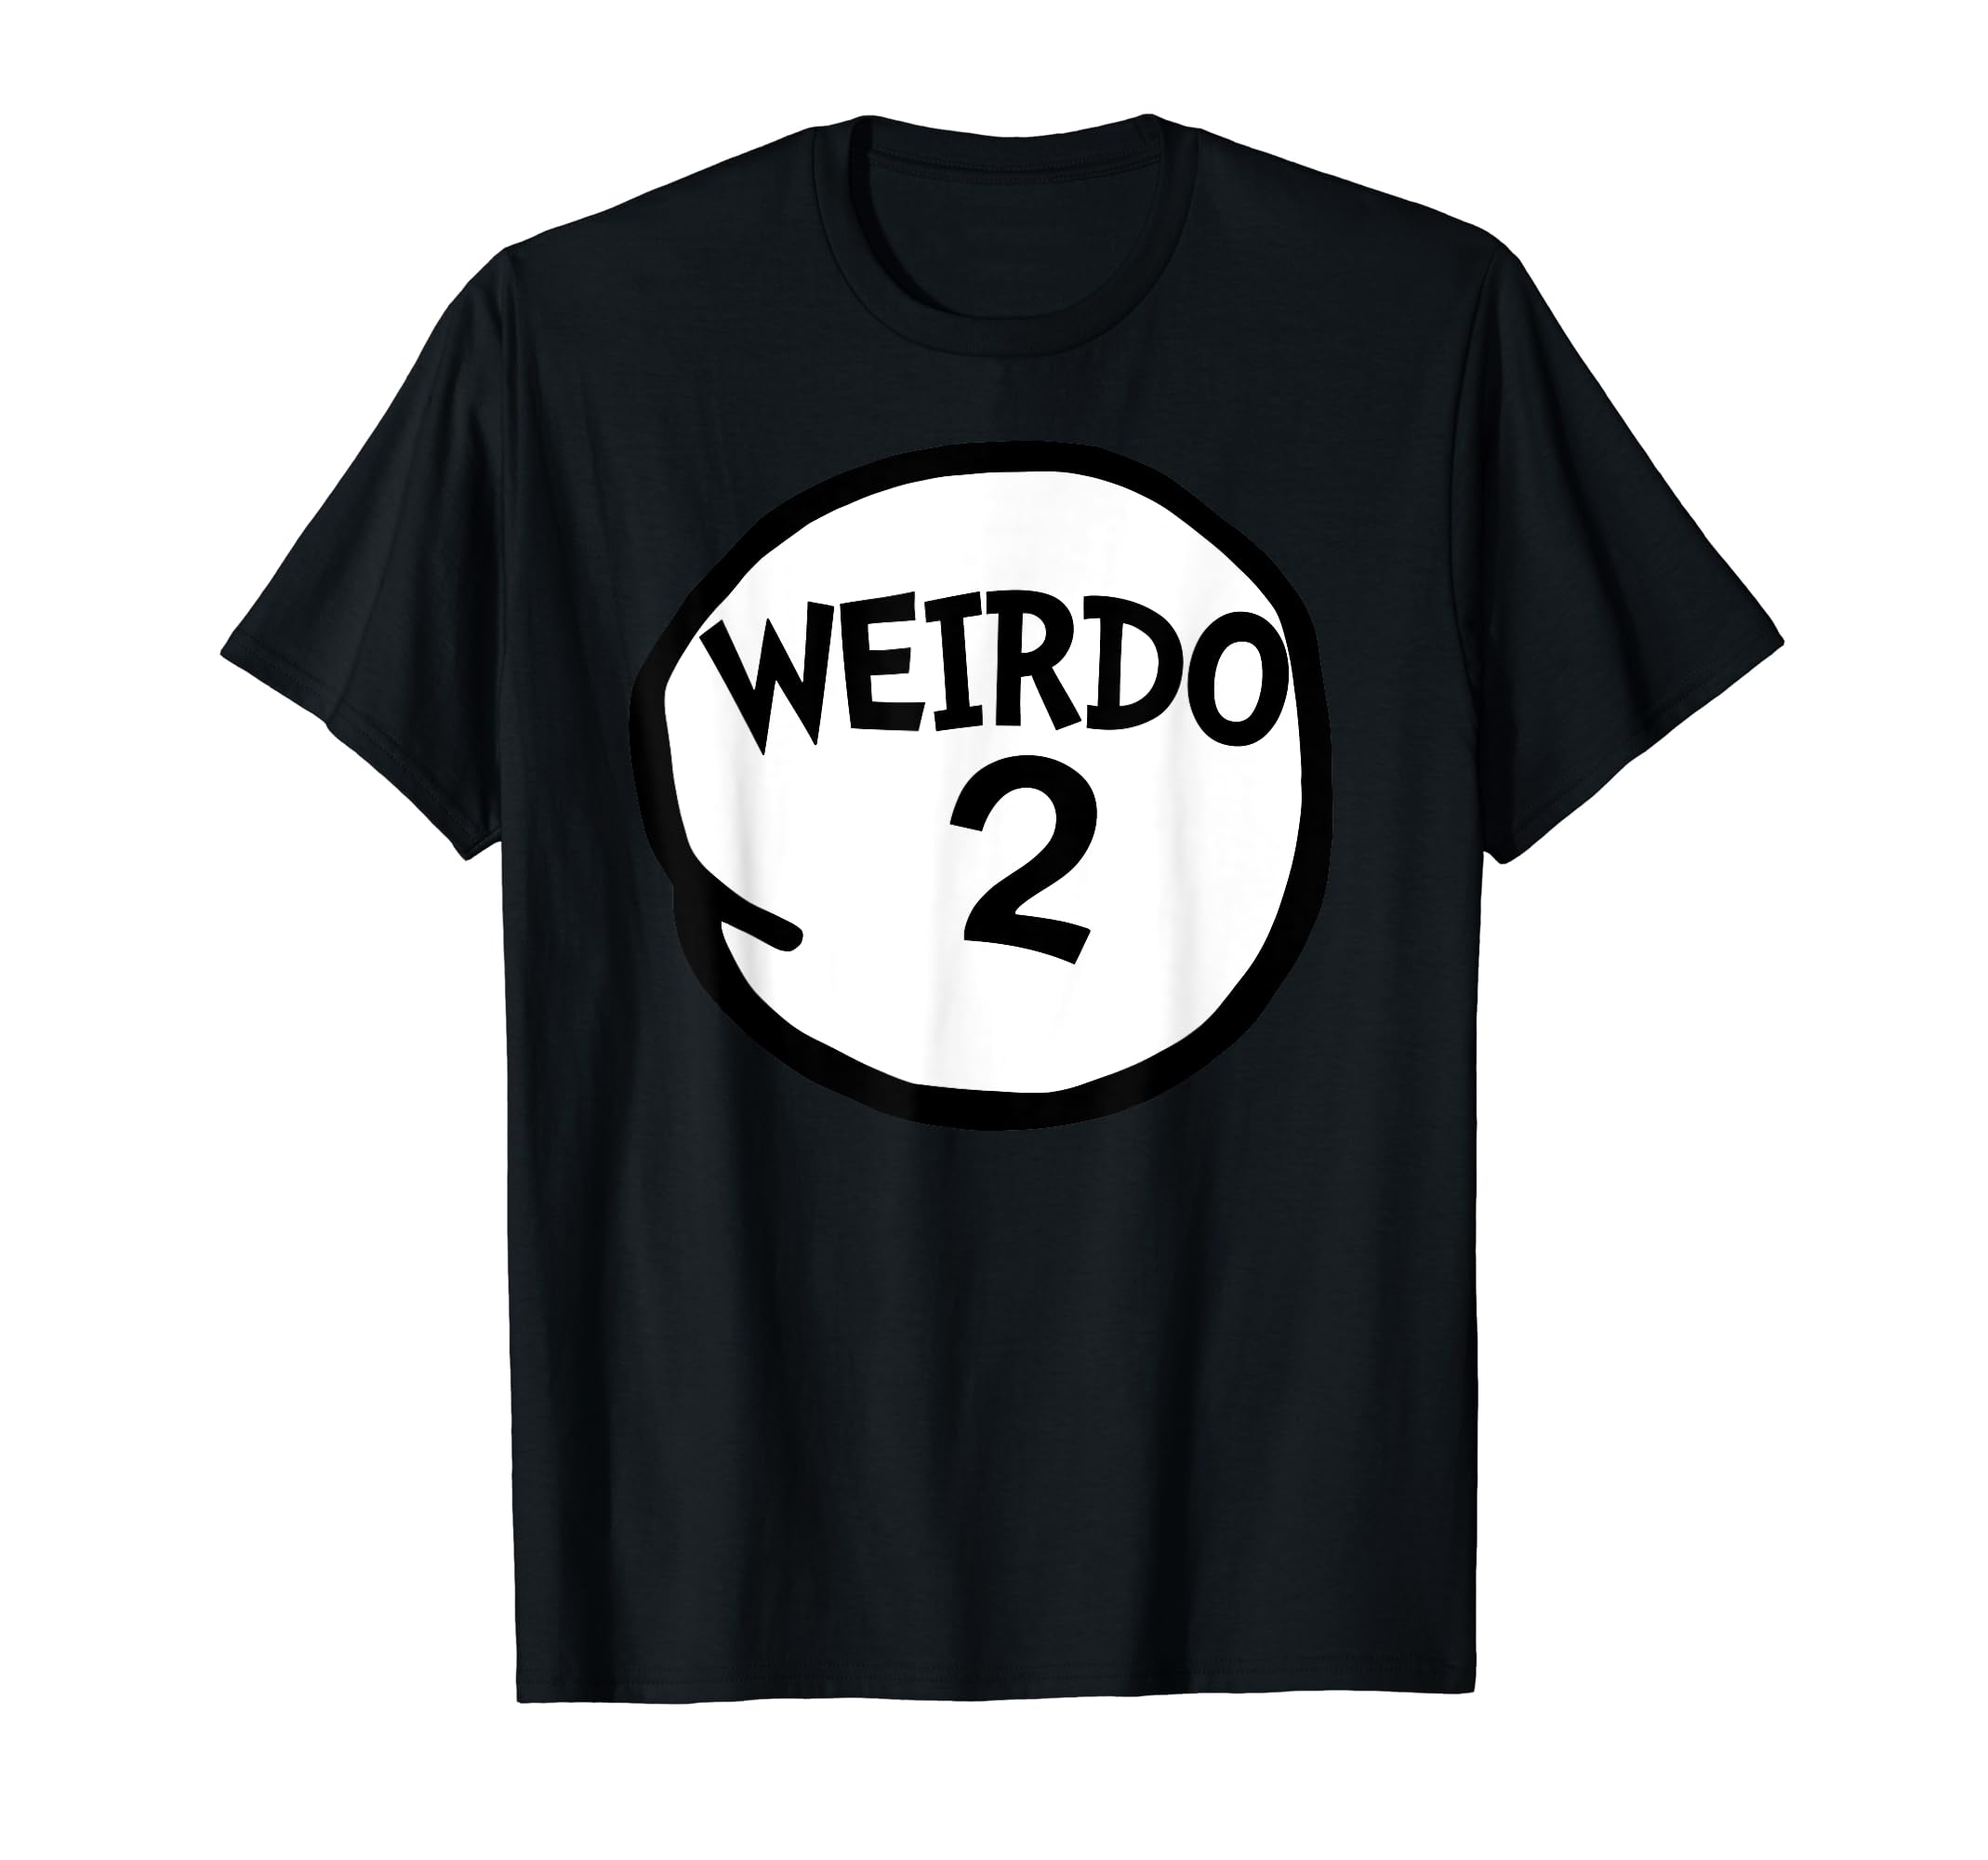 Weirdo 2 t-shirt Funny Weirdo Two Group T-shirt